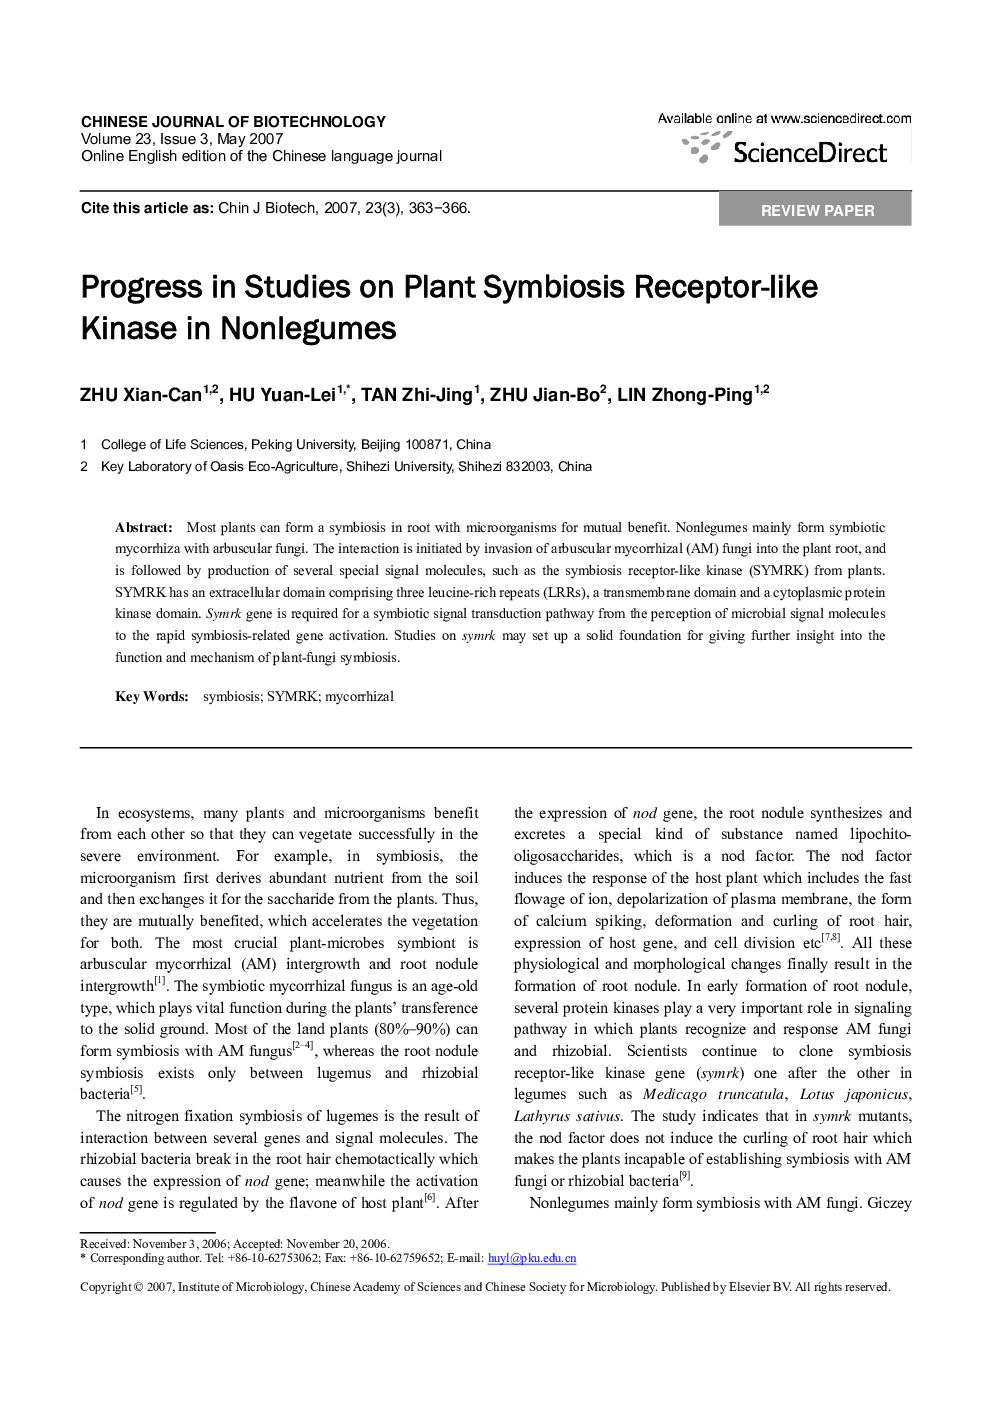 Progress in Studies on Plant Symbiosis Receptor-like Kinase in Nonlegumes